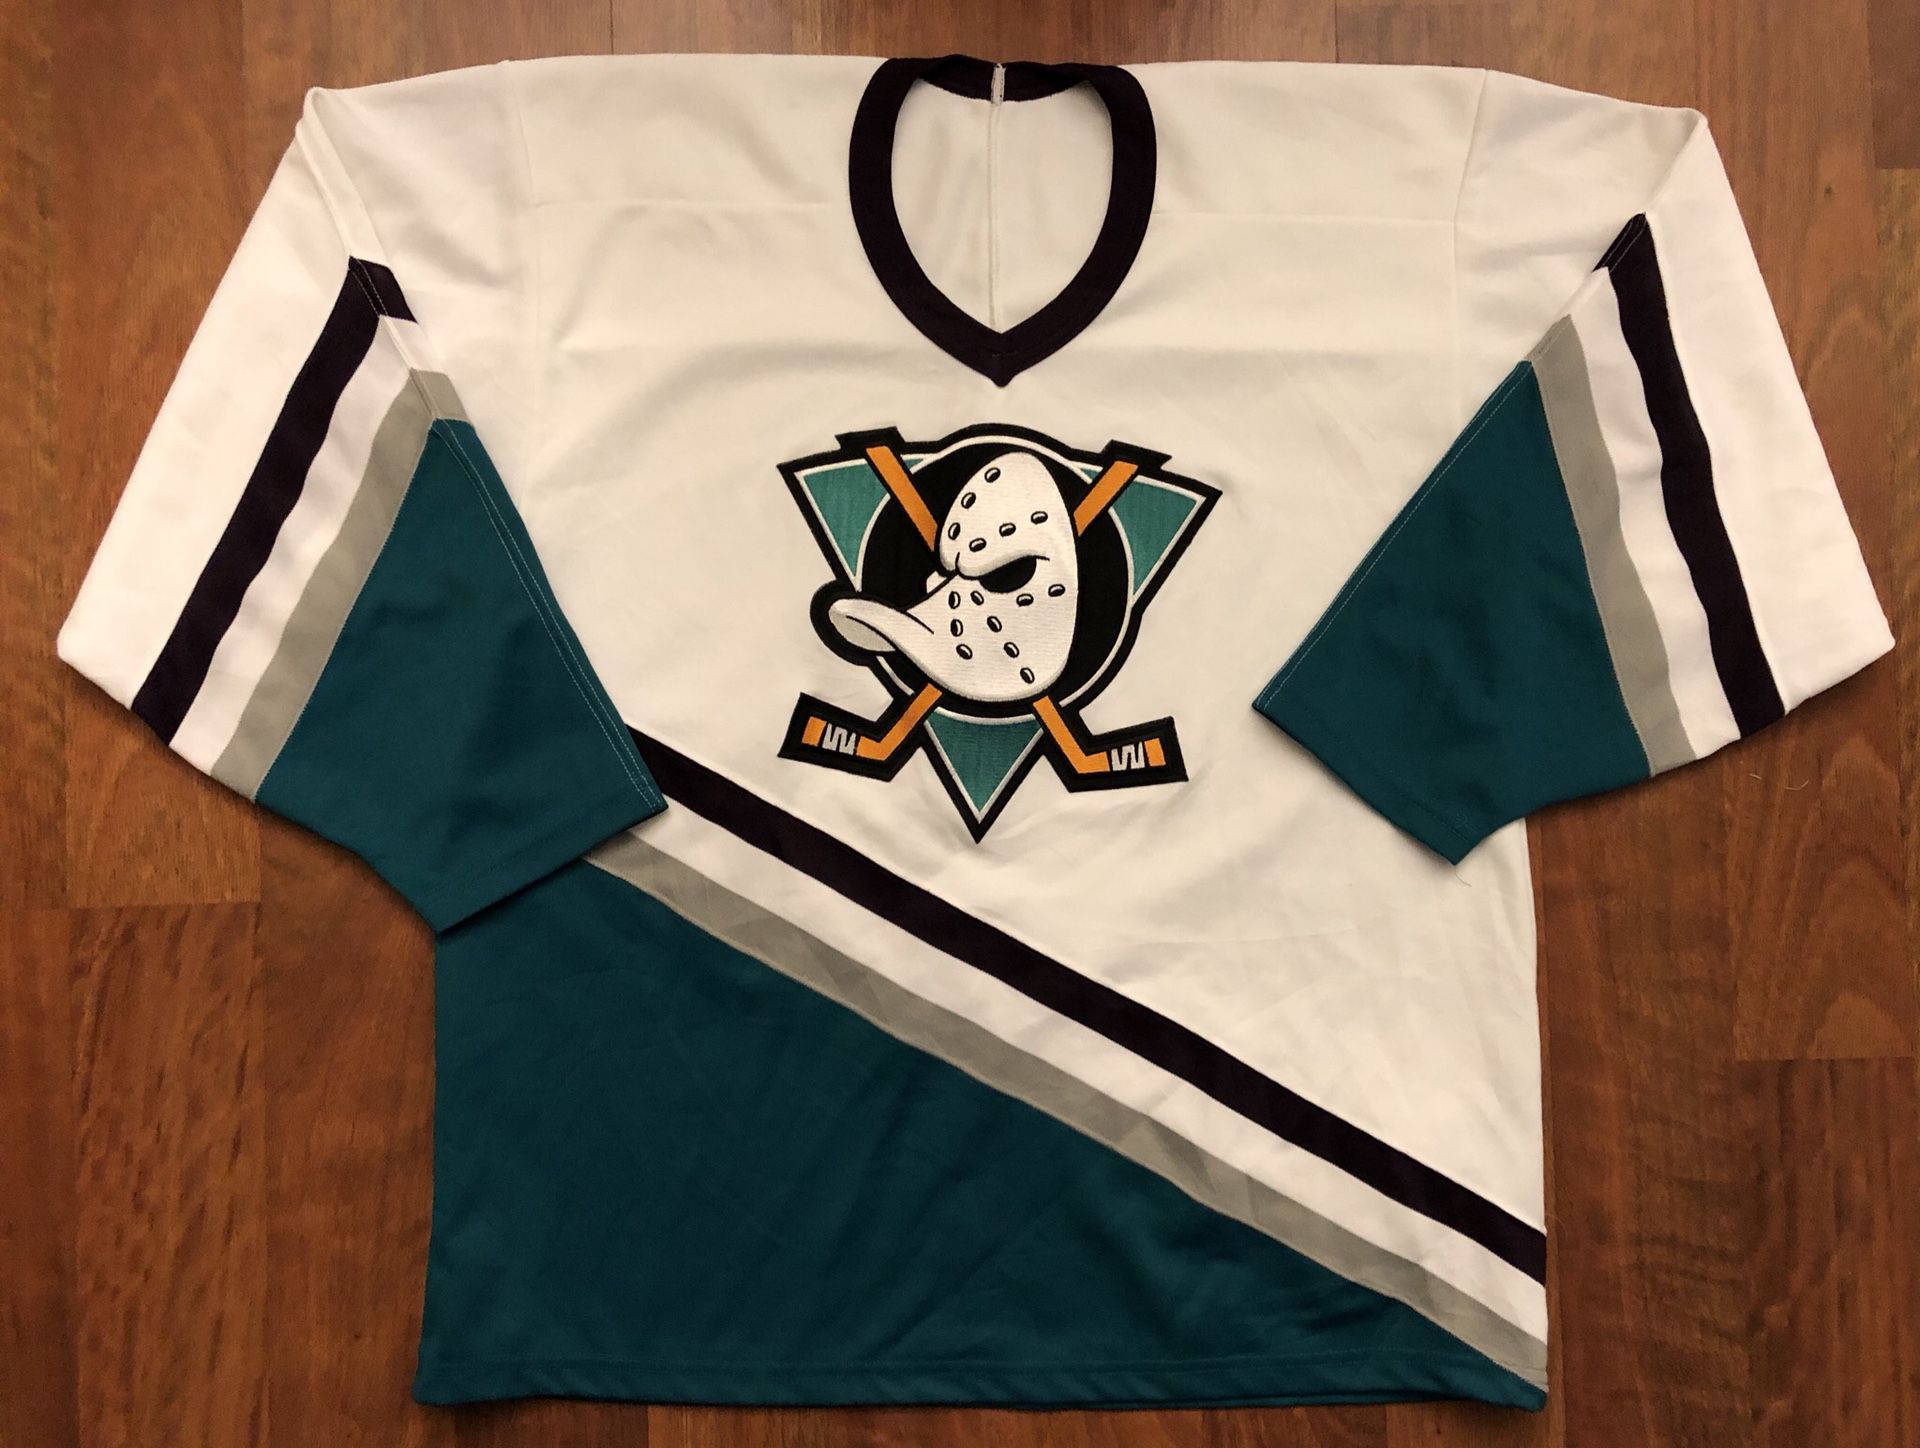 Ccm Anaheim Mighty Ducks Jersey for sale